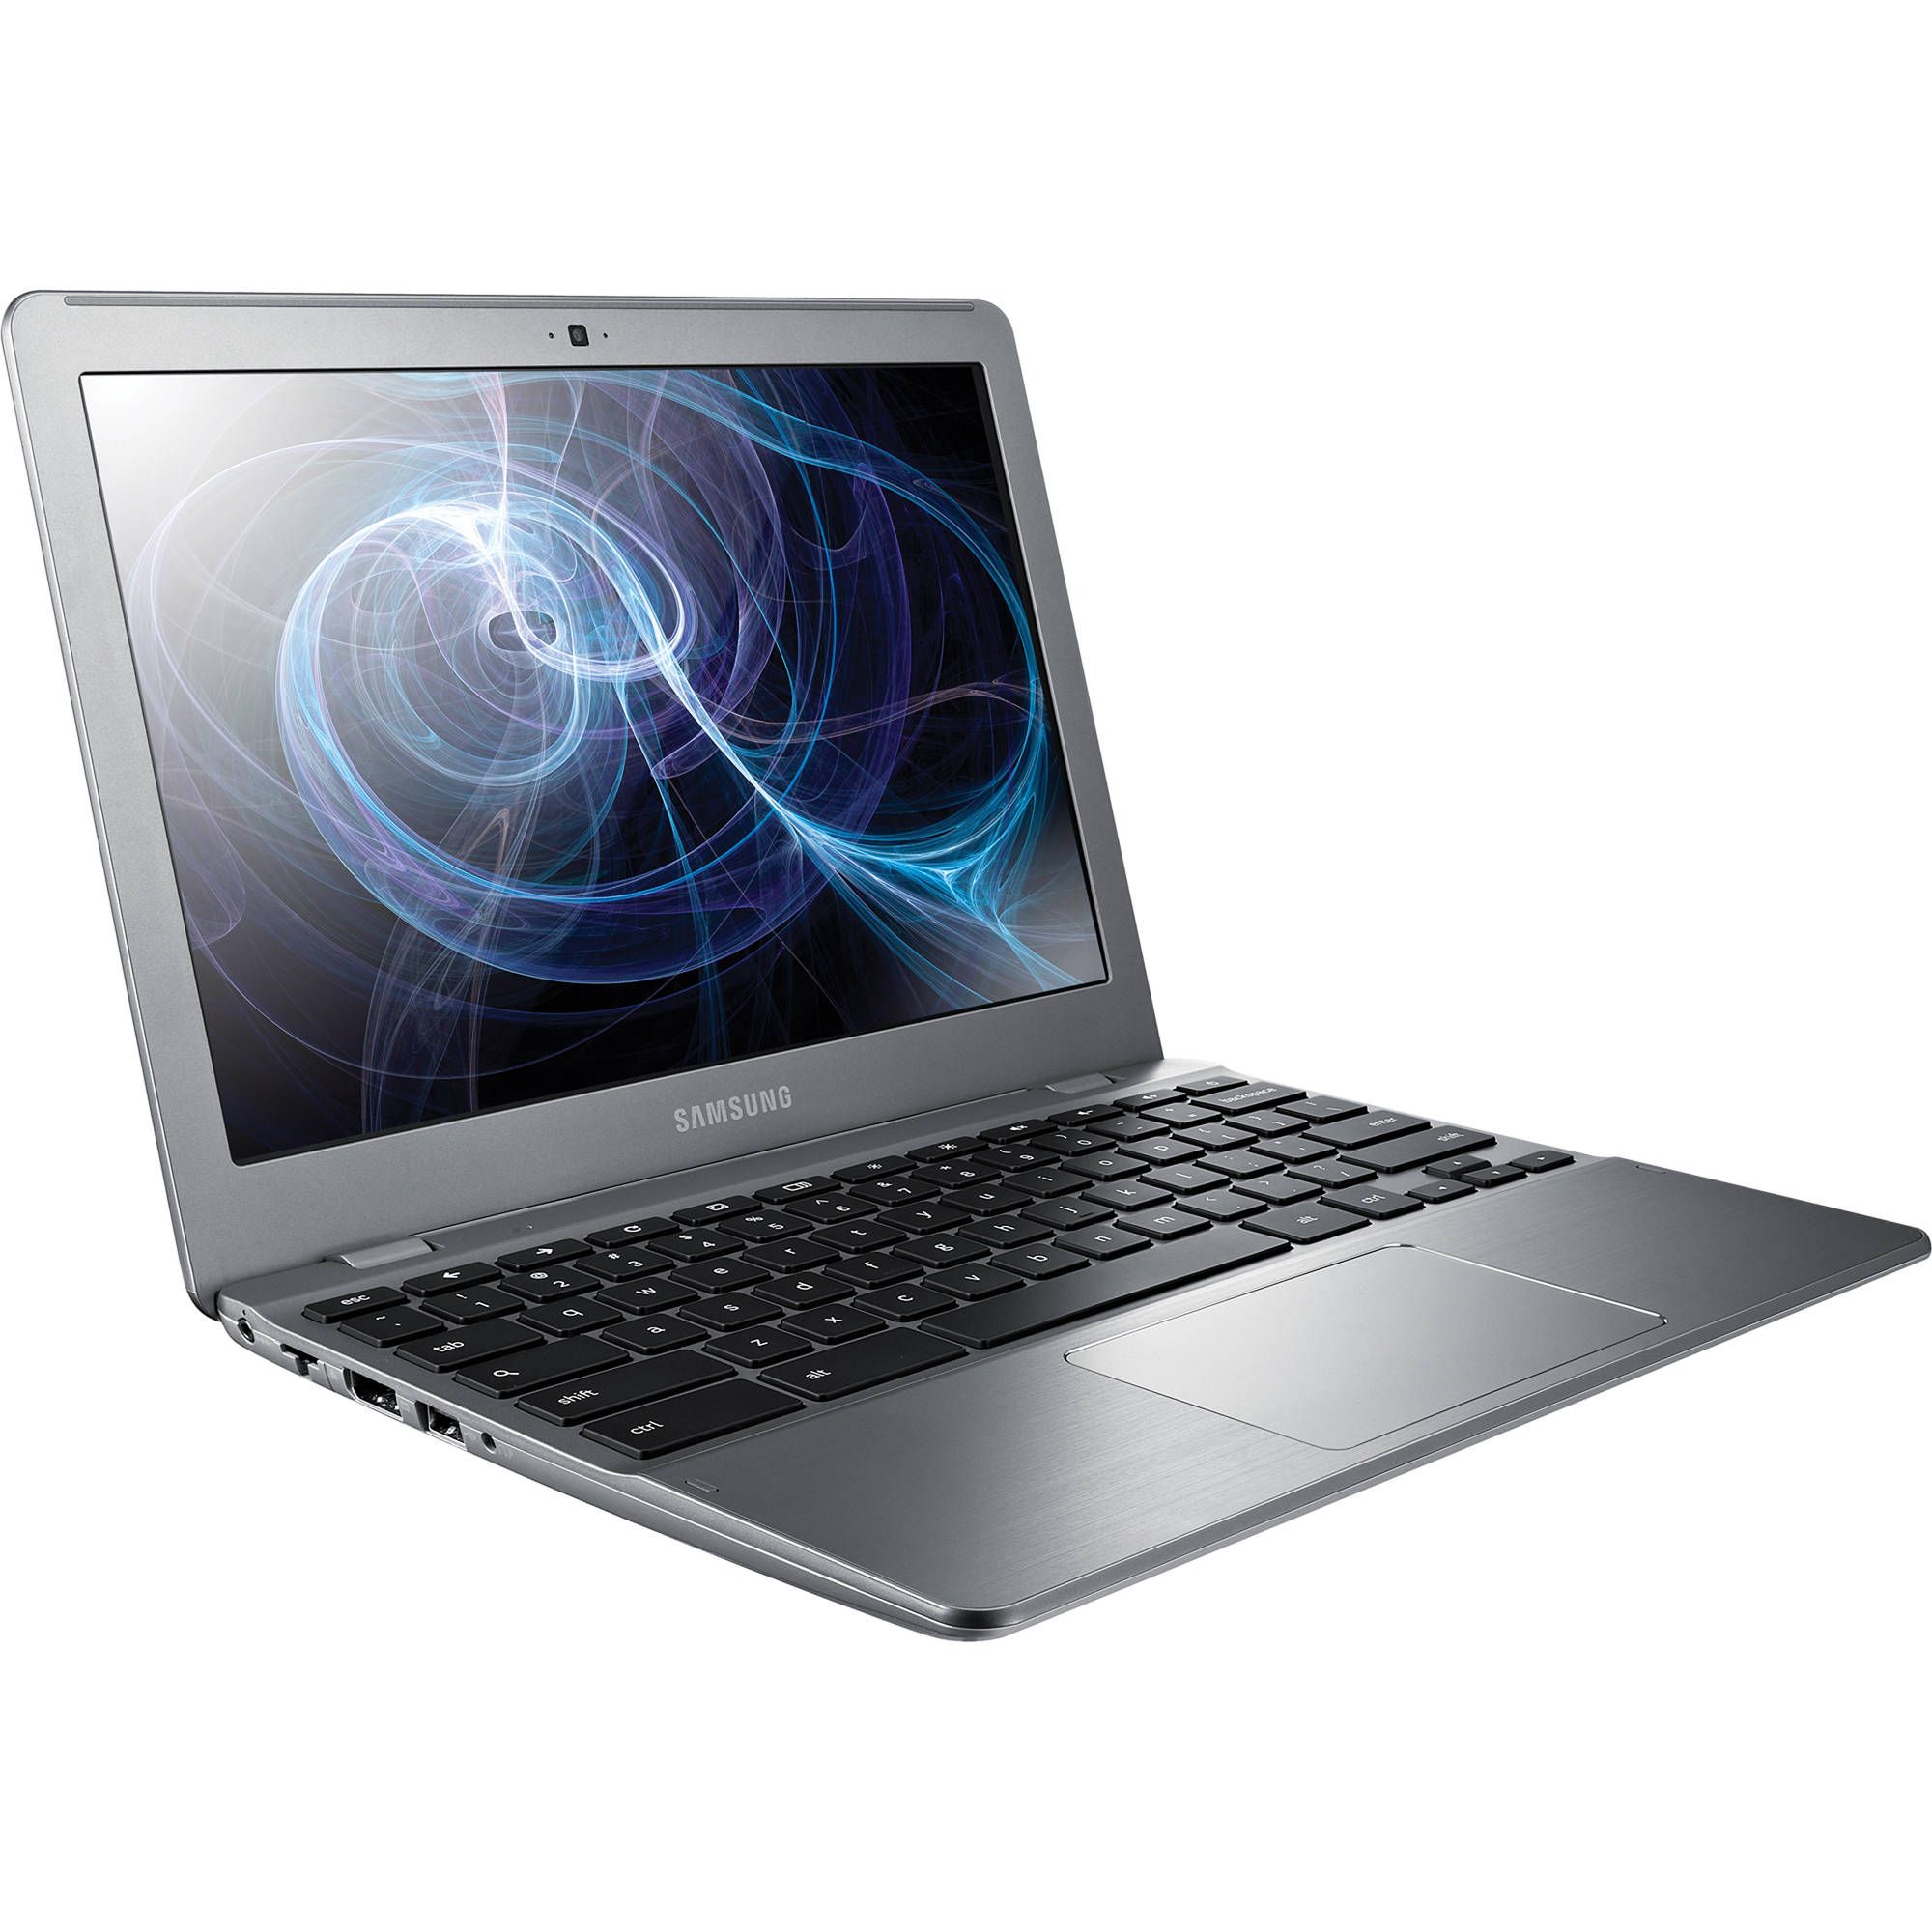 Samsung Series 5 XE550C22 Chromebook, Celeron 867, 4GB, 16GB - Refurbished Good Condition